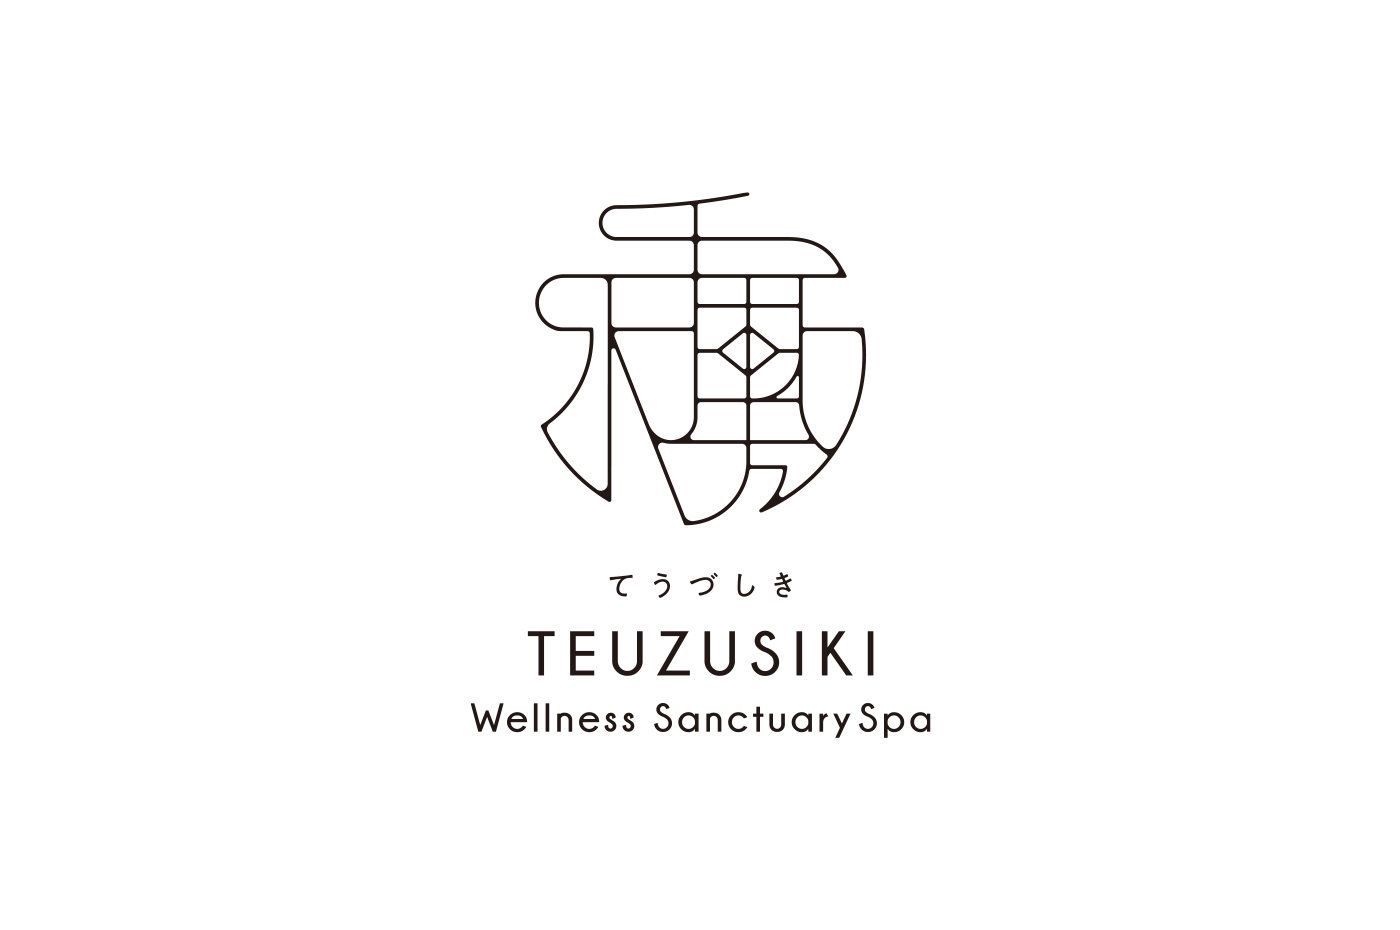 TEUZUSIKI Wellness Sanctuary Spa